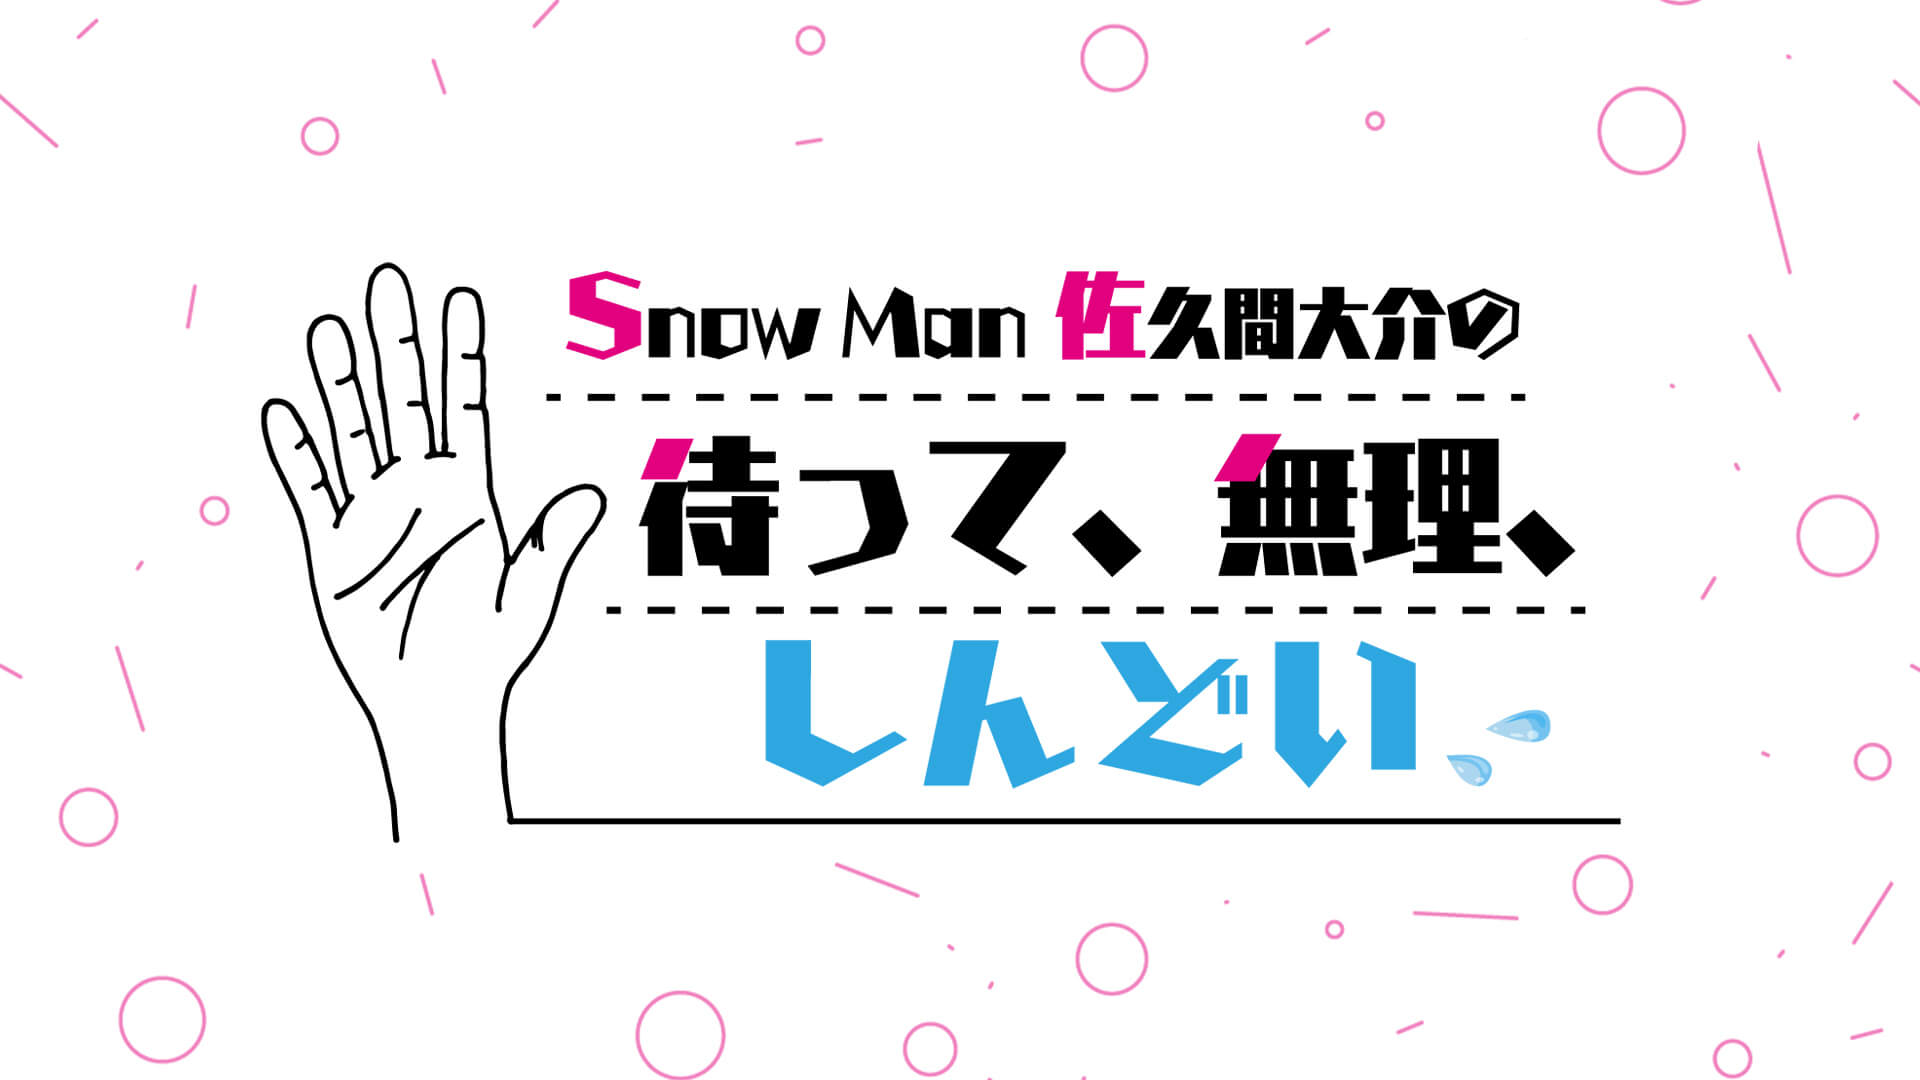 Snow Man 佐久間大介の待って 無理 しんどい 文化放送